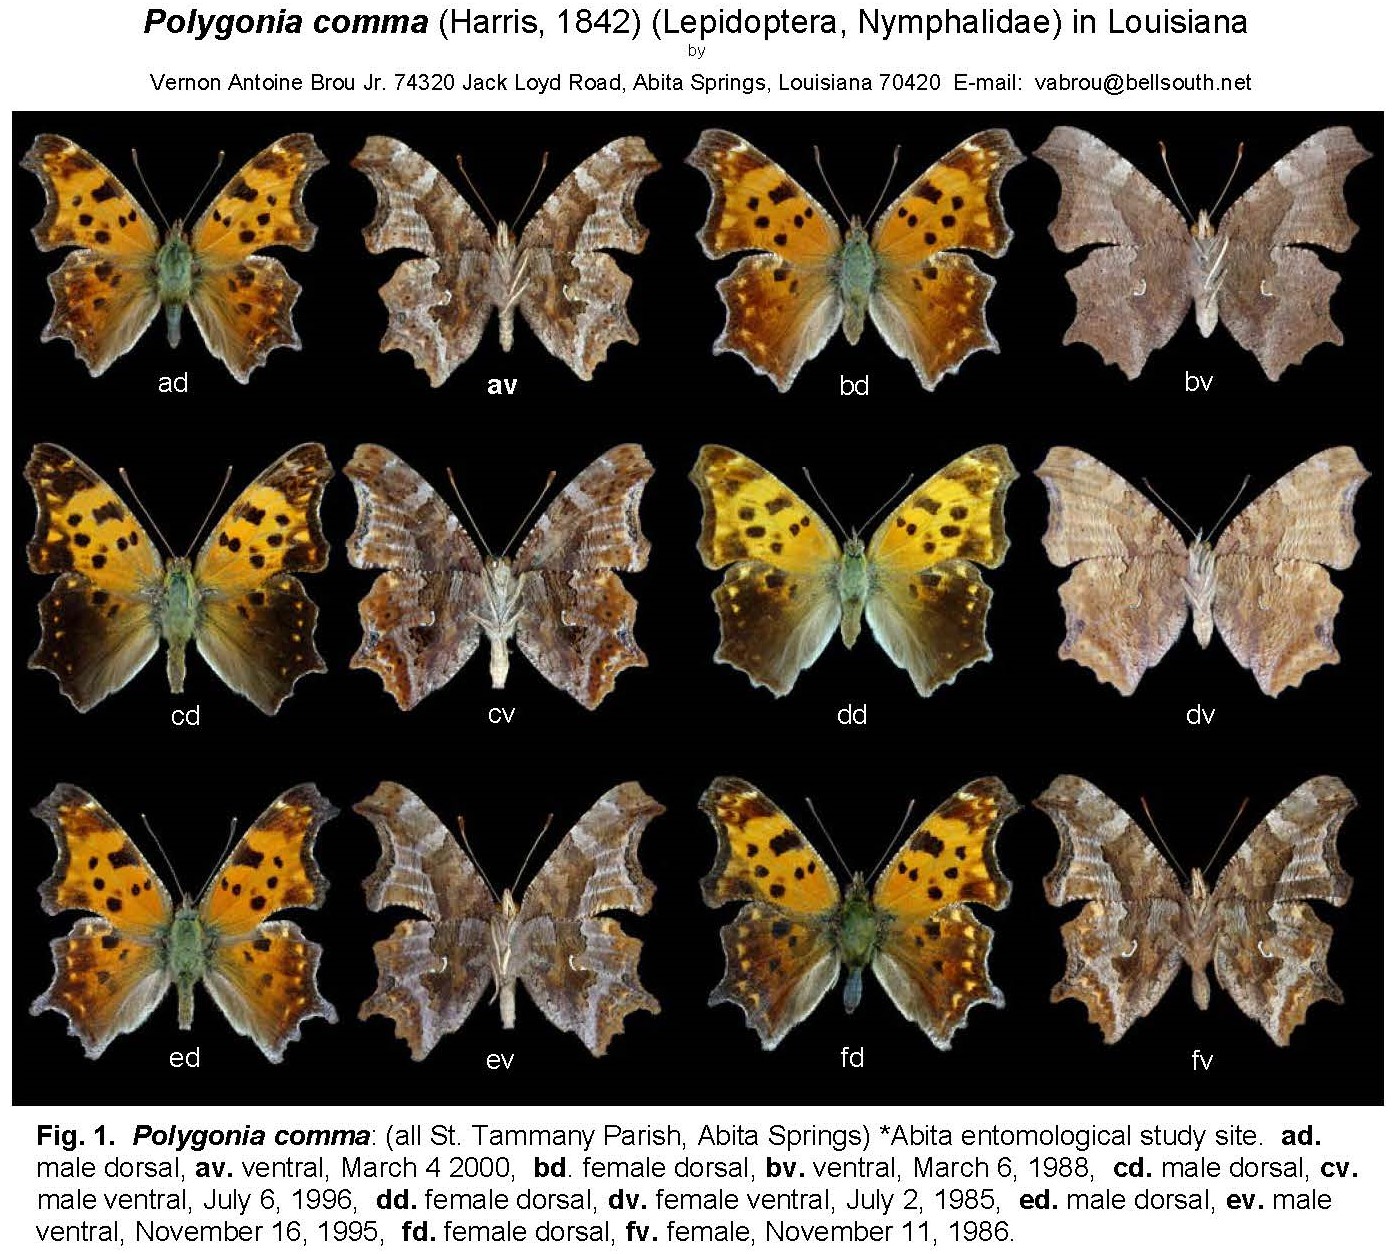 Polygonia comma (Harris, 1842) (Lepidoptera, Nymphalidae) in Louisiana Master extra_Page_1cro.jpg